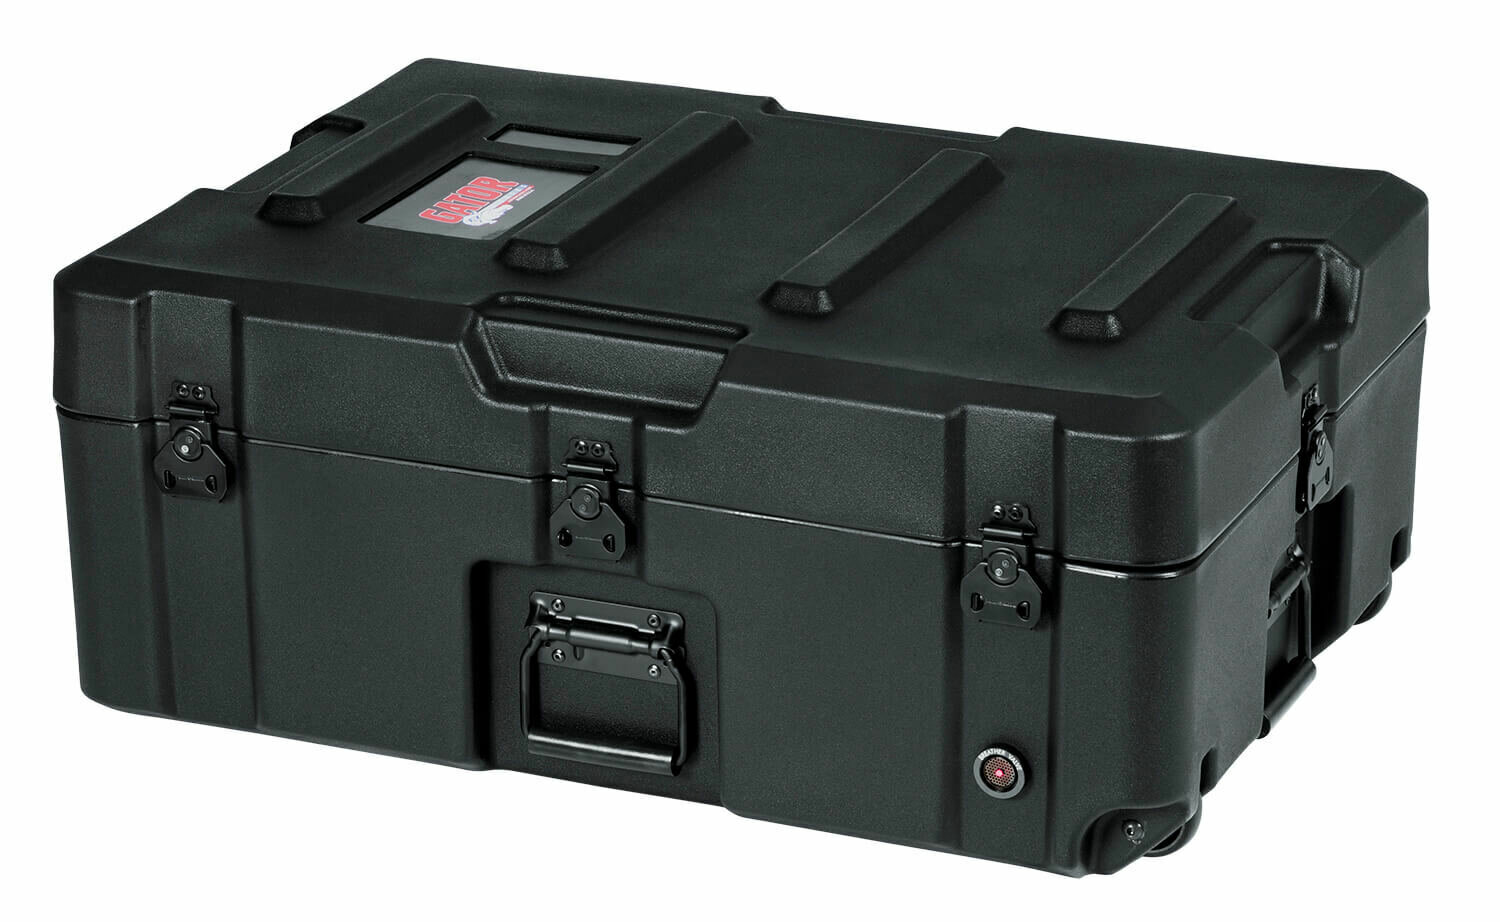 Gator Cases ATA Heavy Duty Roto-Molded Utility Case (Black, 28x19x11" Interior)
#GAGXR2819083 • MFR #GXR-2819-0803